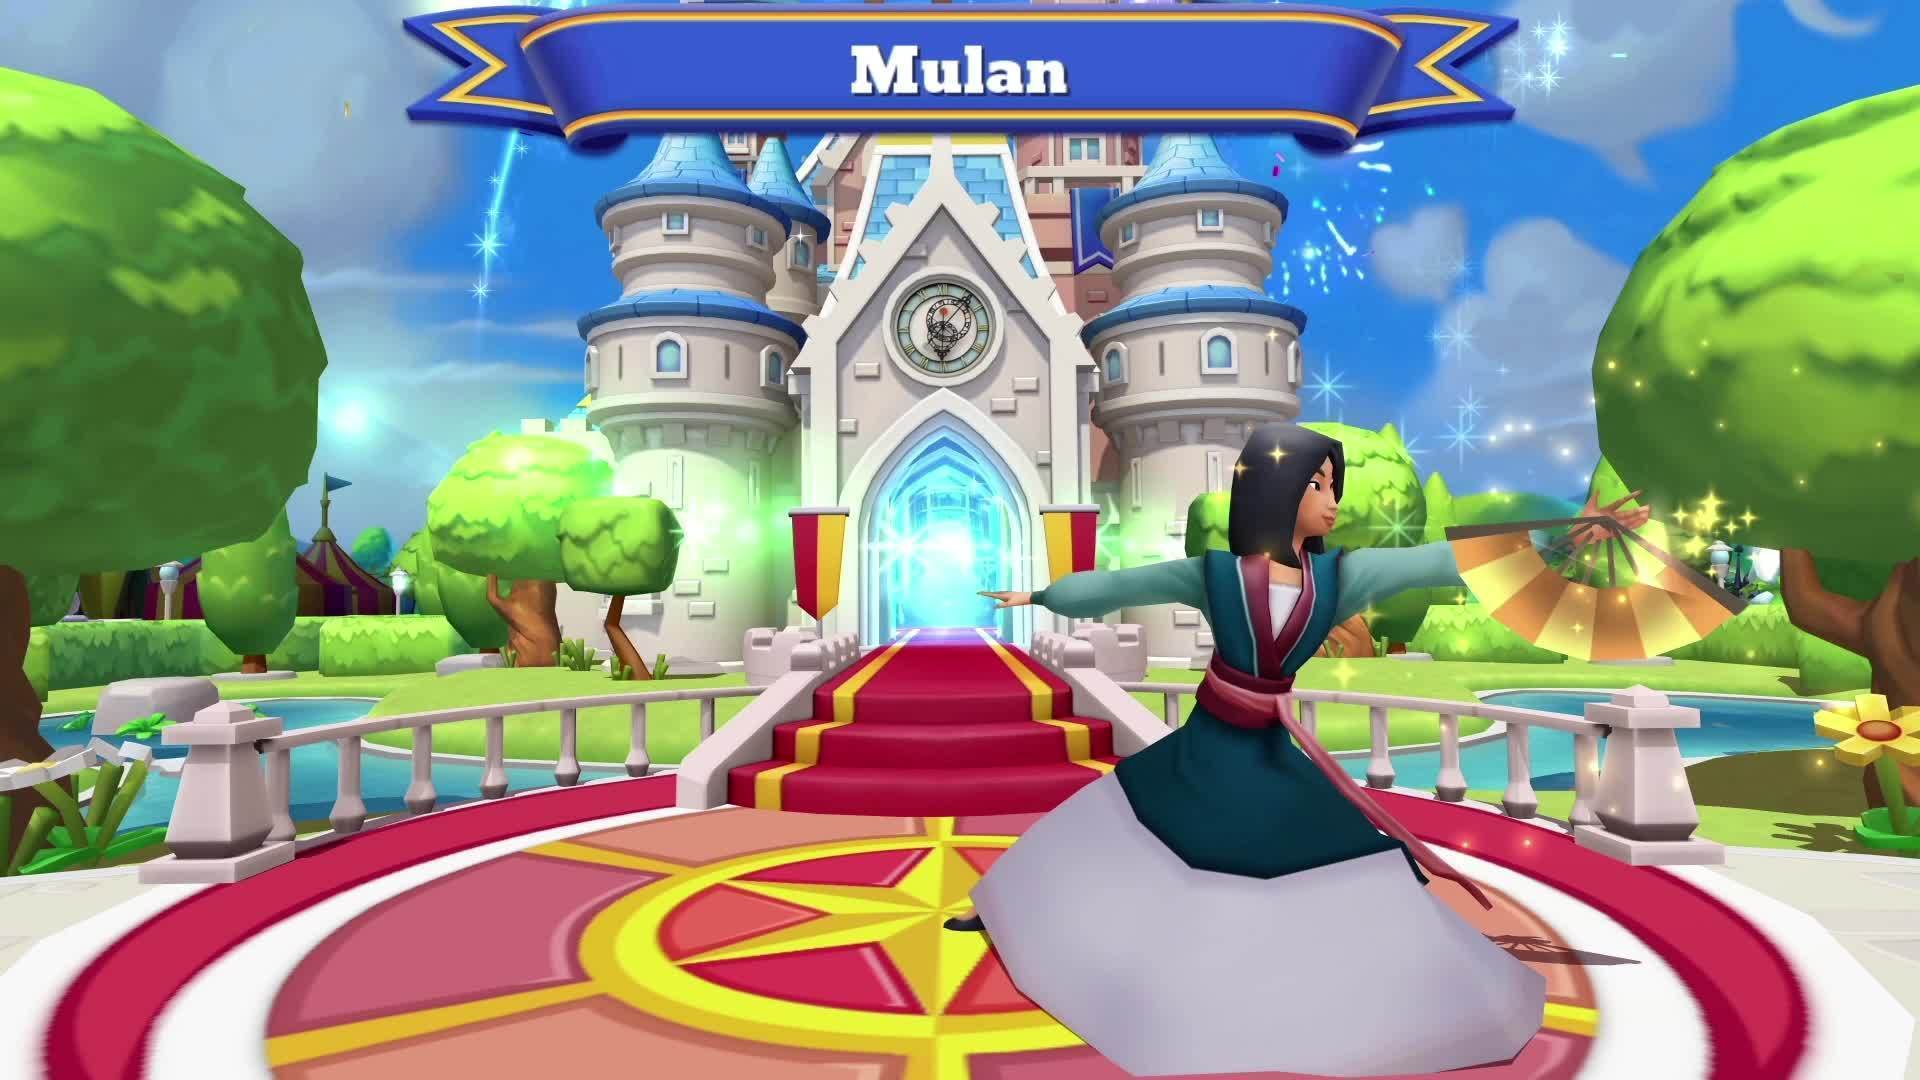 Disney Magic Kingdoms: Mulan Update